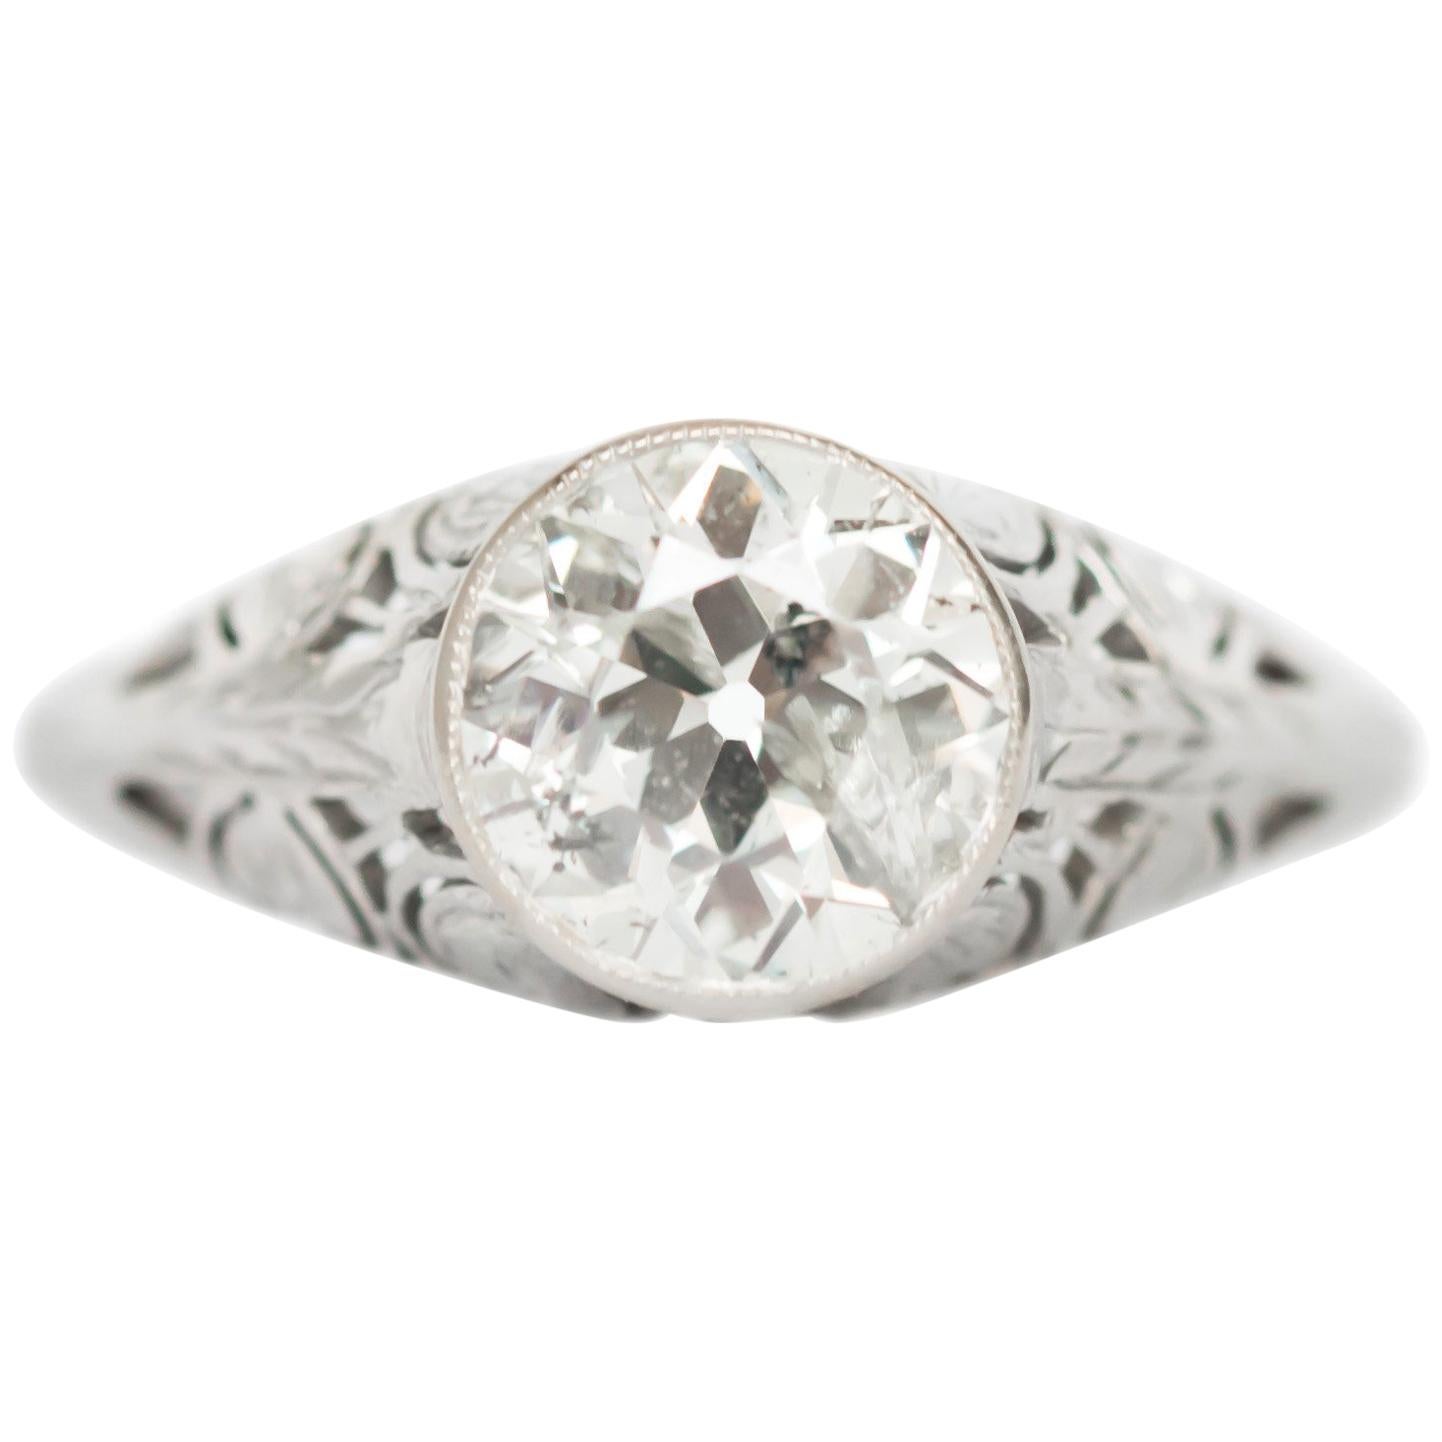 1.58 Carat Diamond Engagement Ring